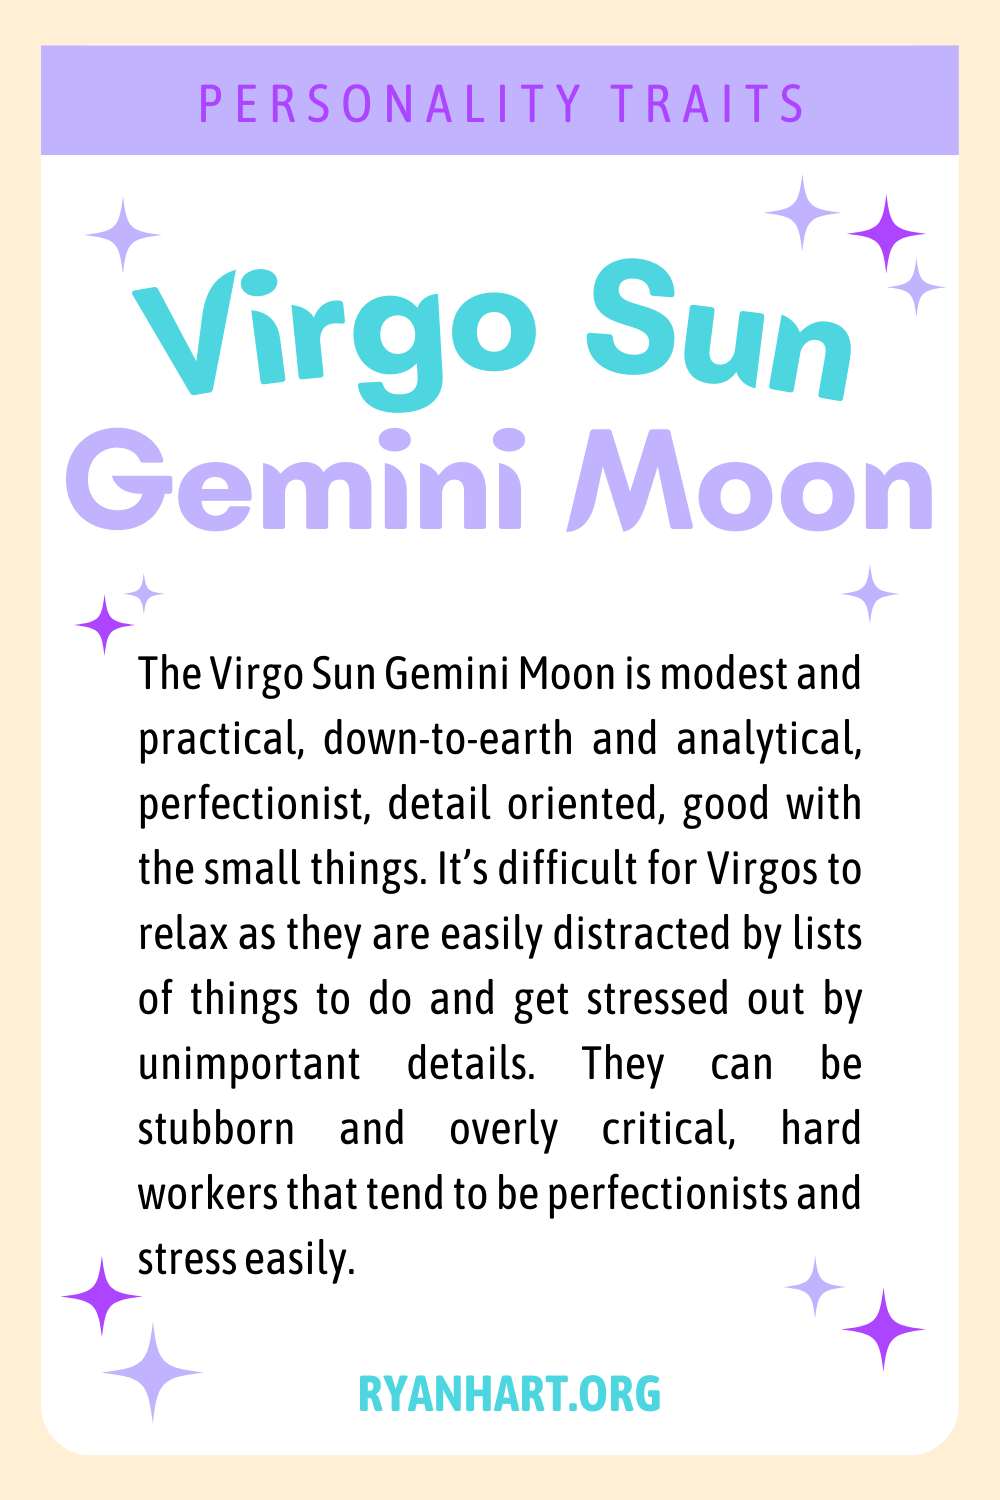 Virgo Sun Gemini Moon Description